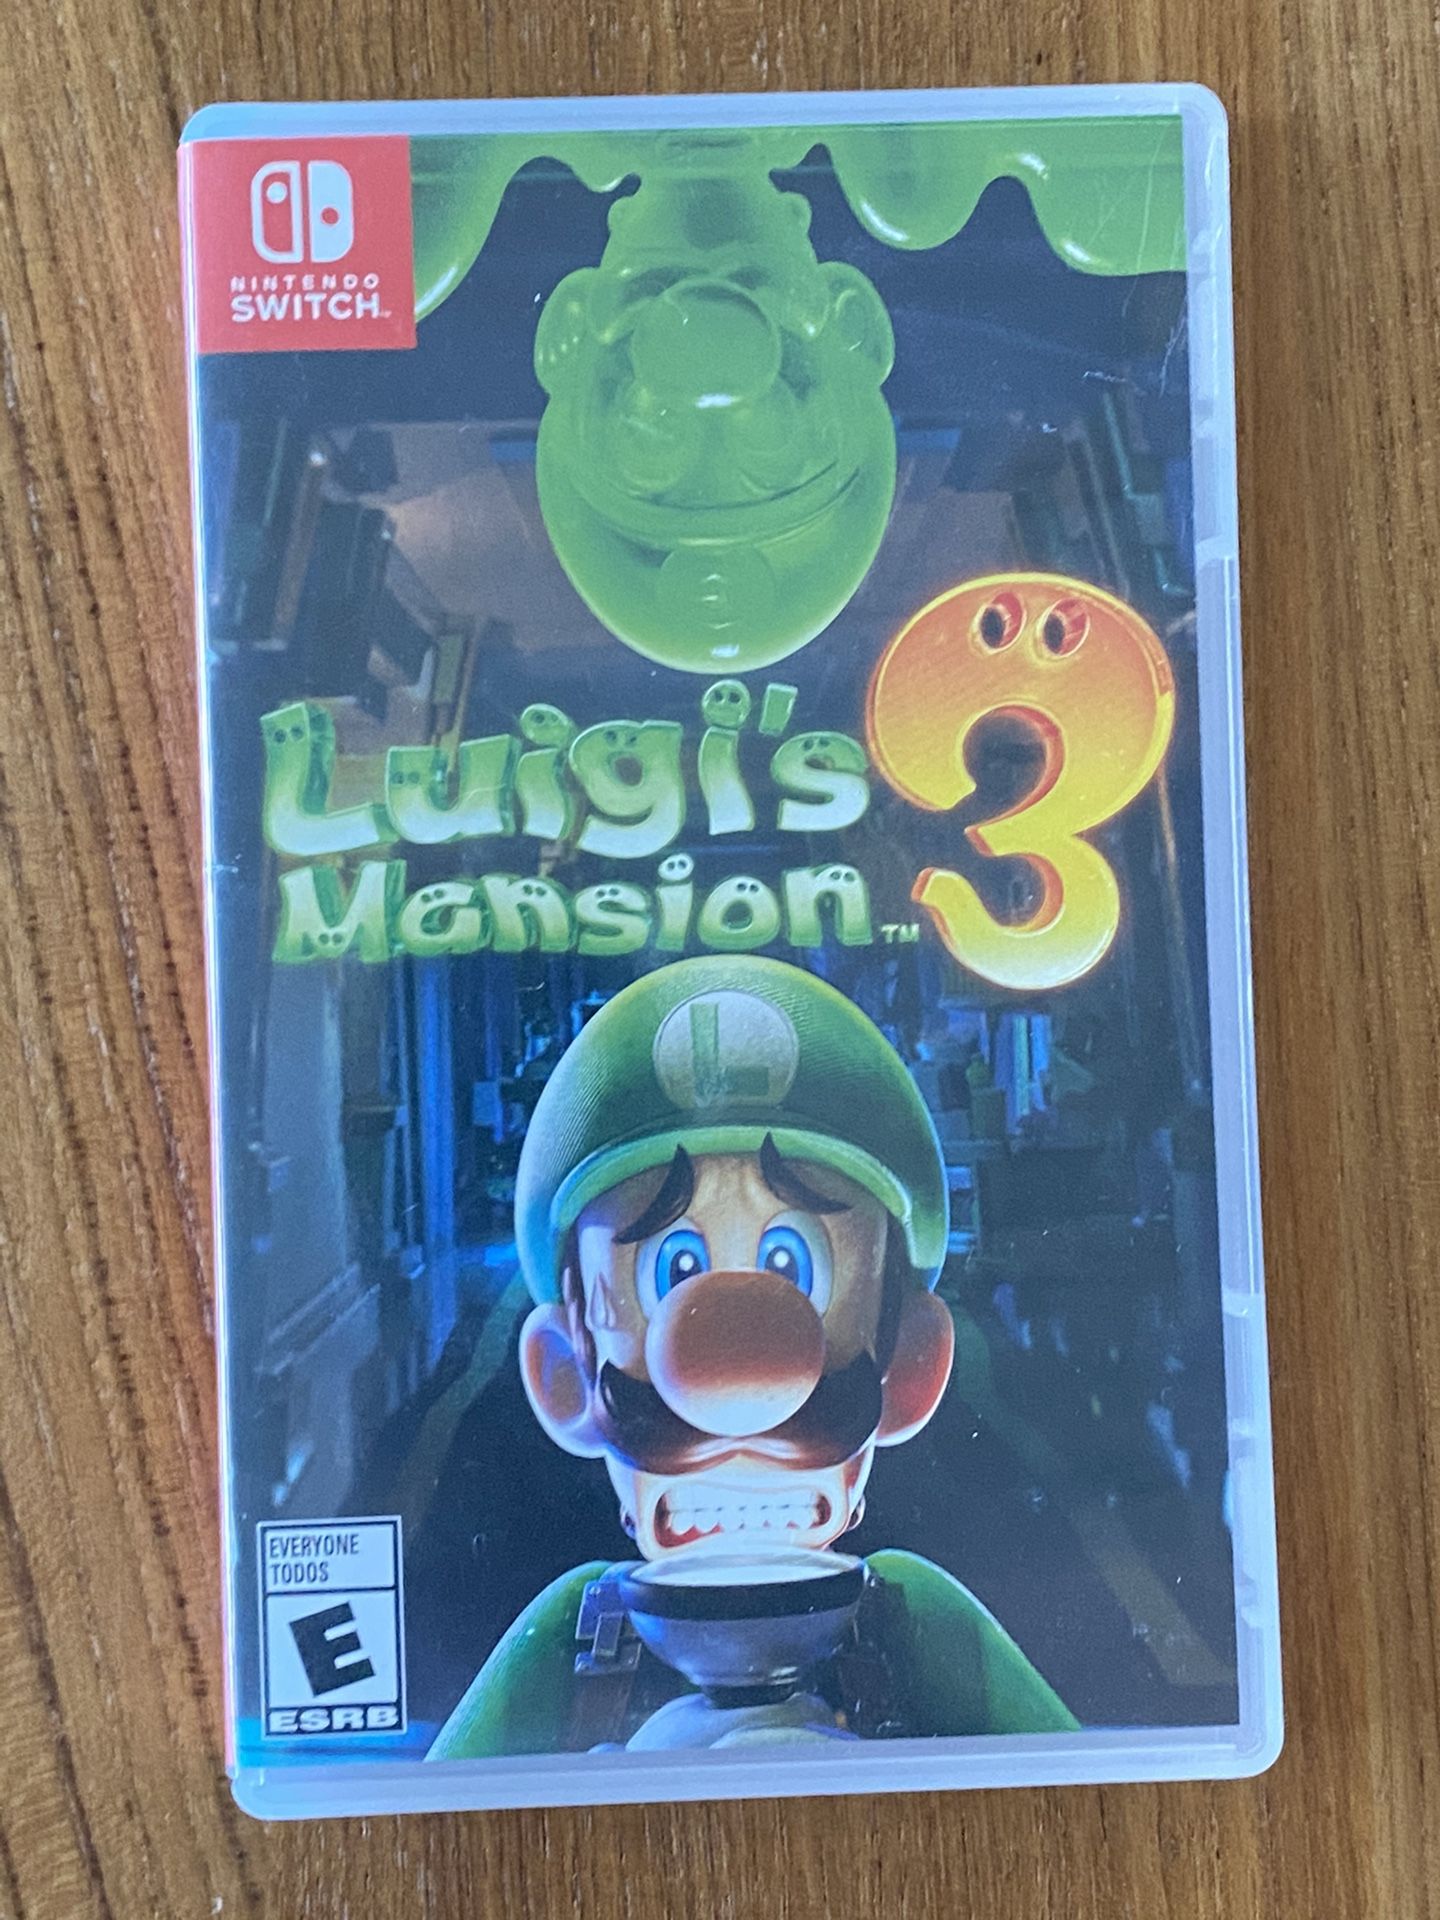 Luigis Mansion 3 for Nintendo Switch